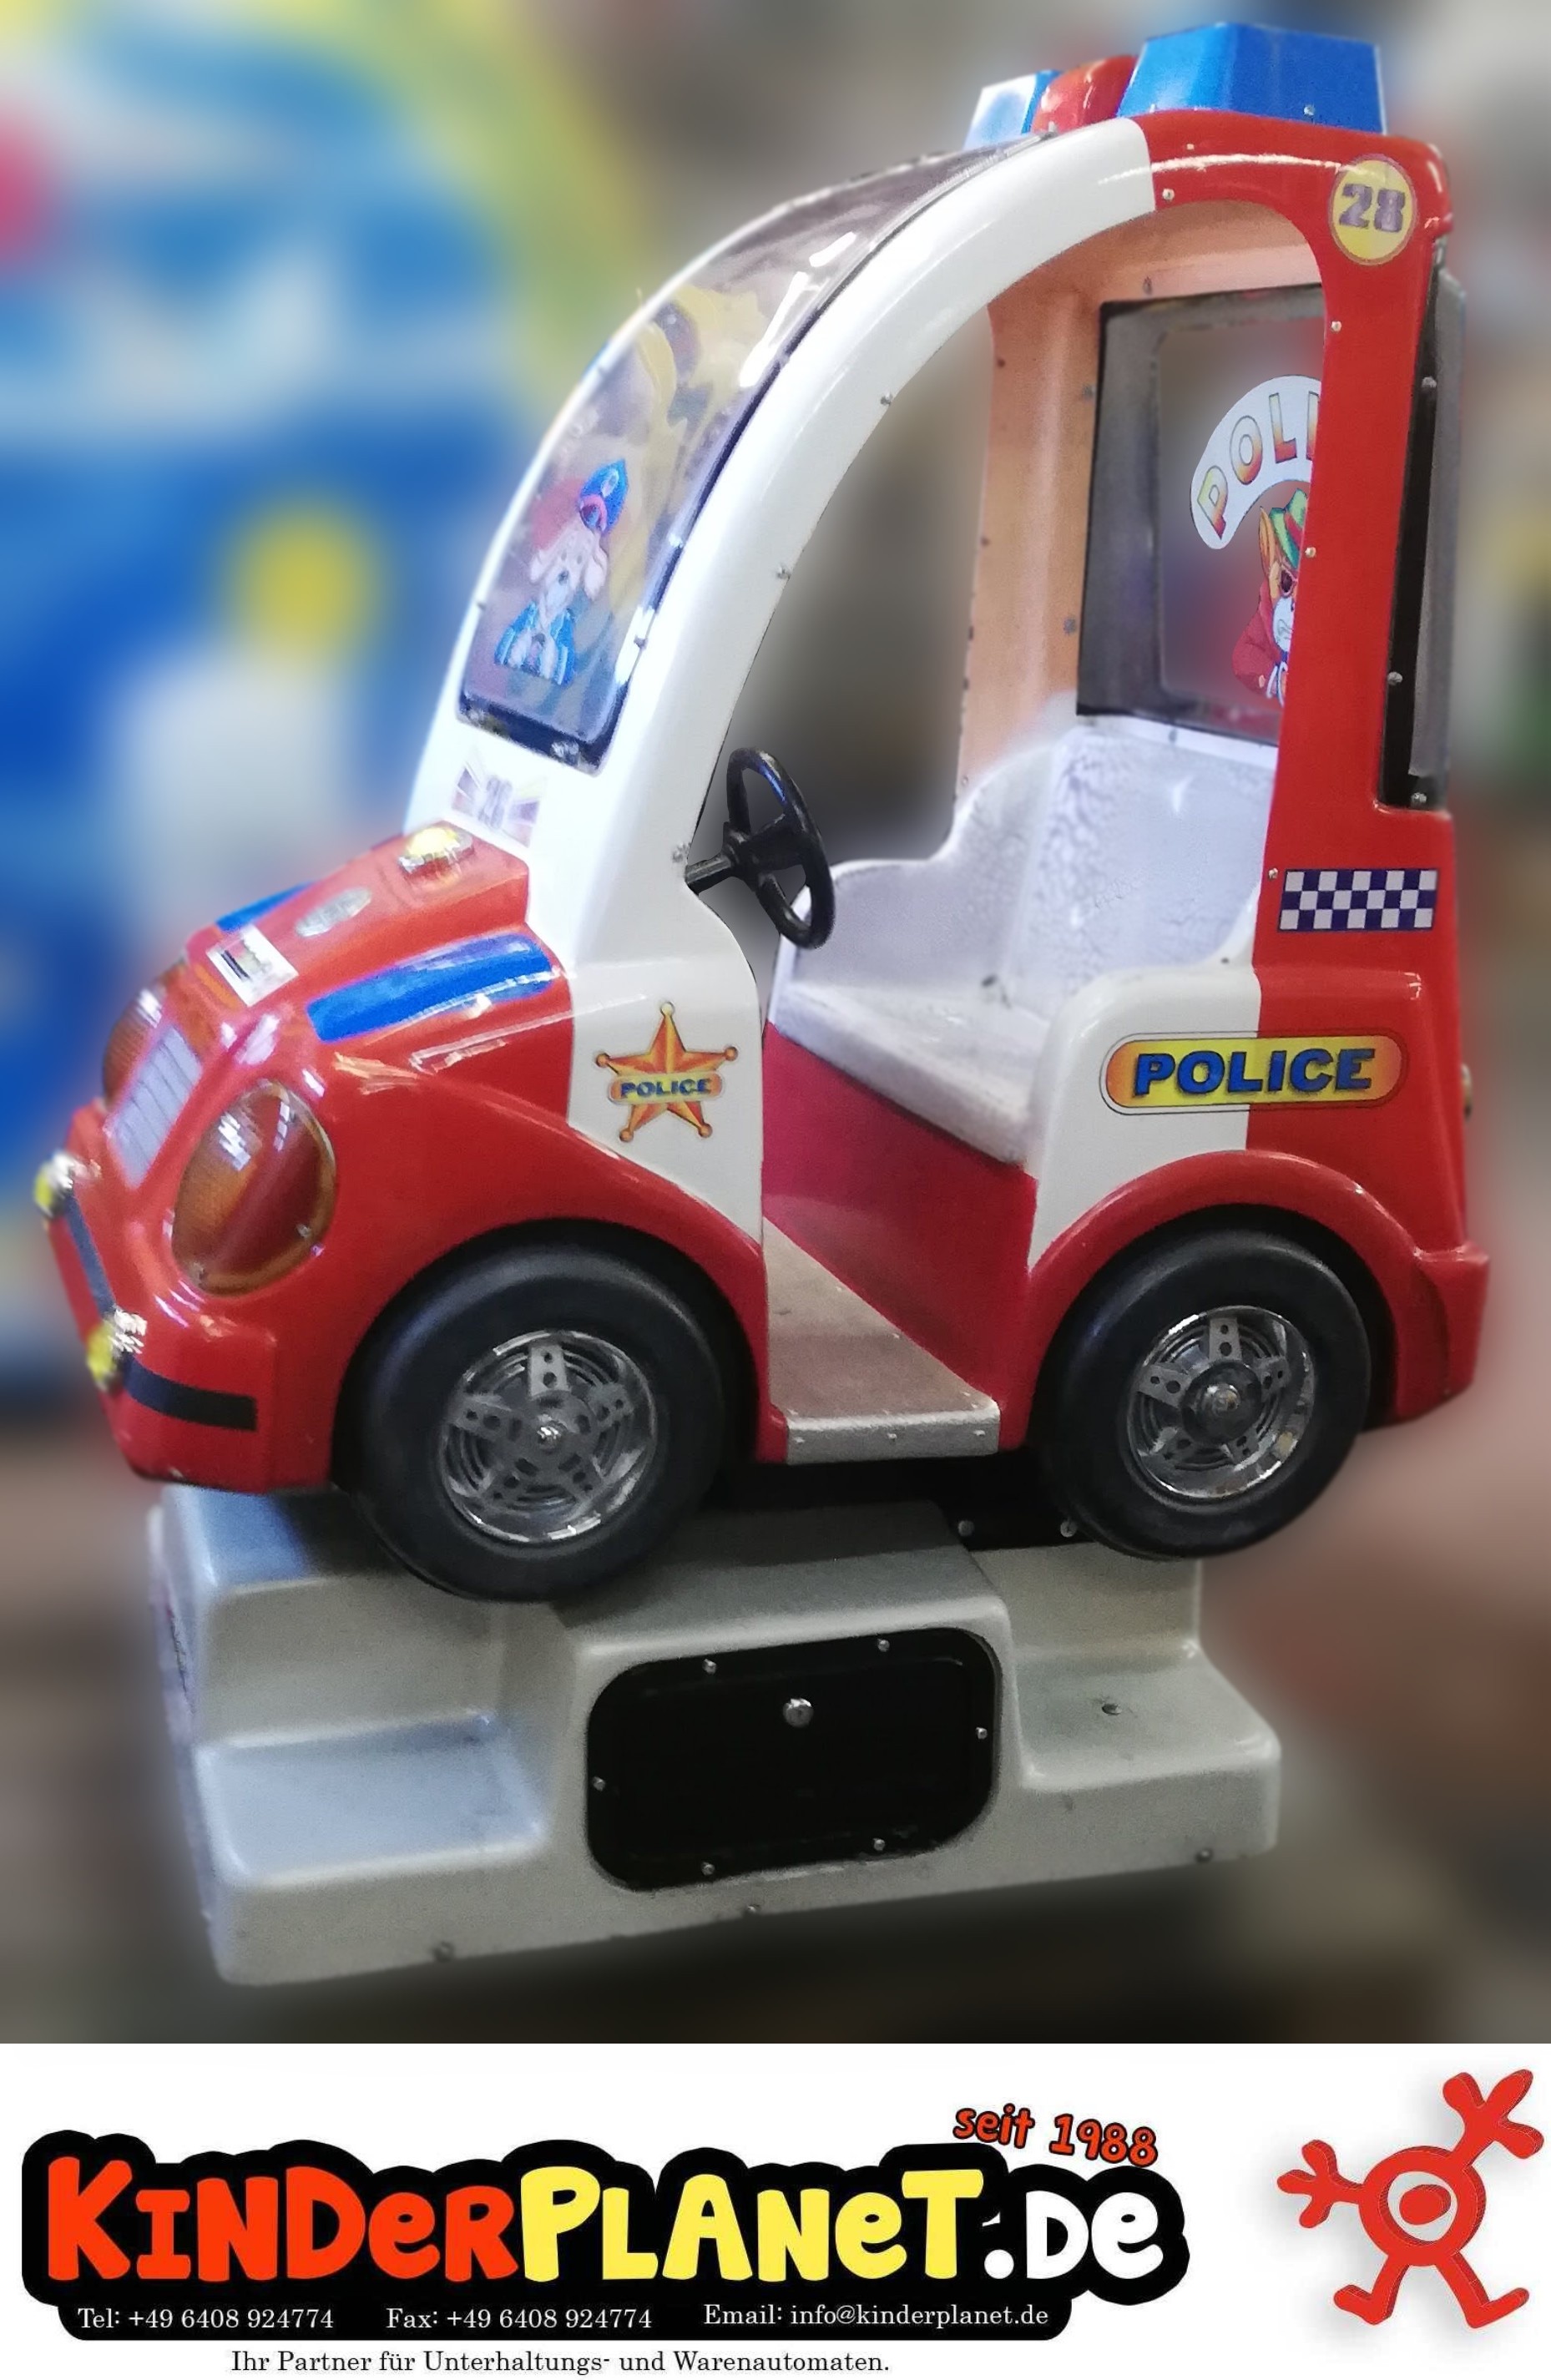 Police Car im Cartoon-Design